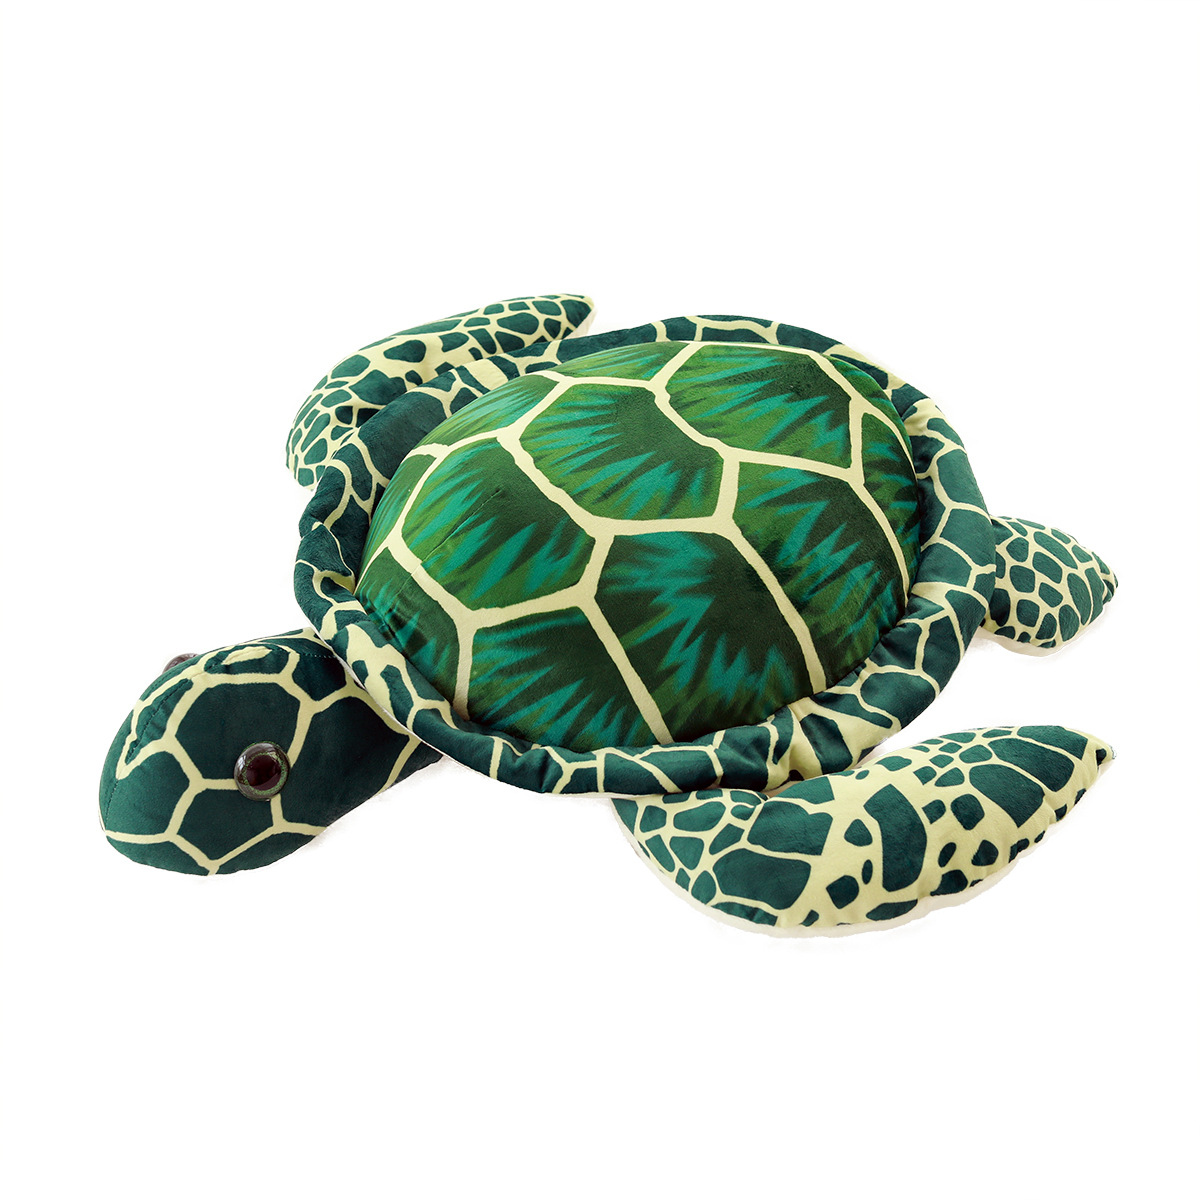 Sea Animals Toys Stuffed Turtle Toys